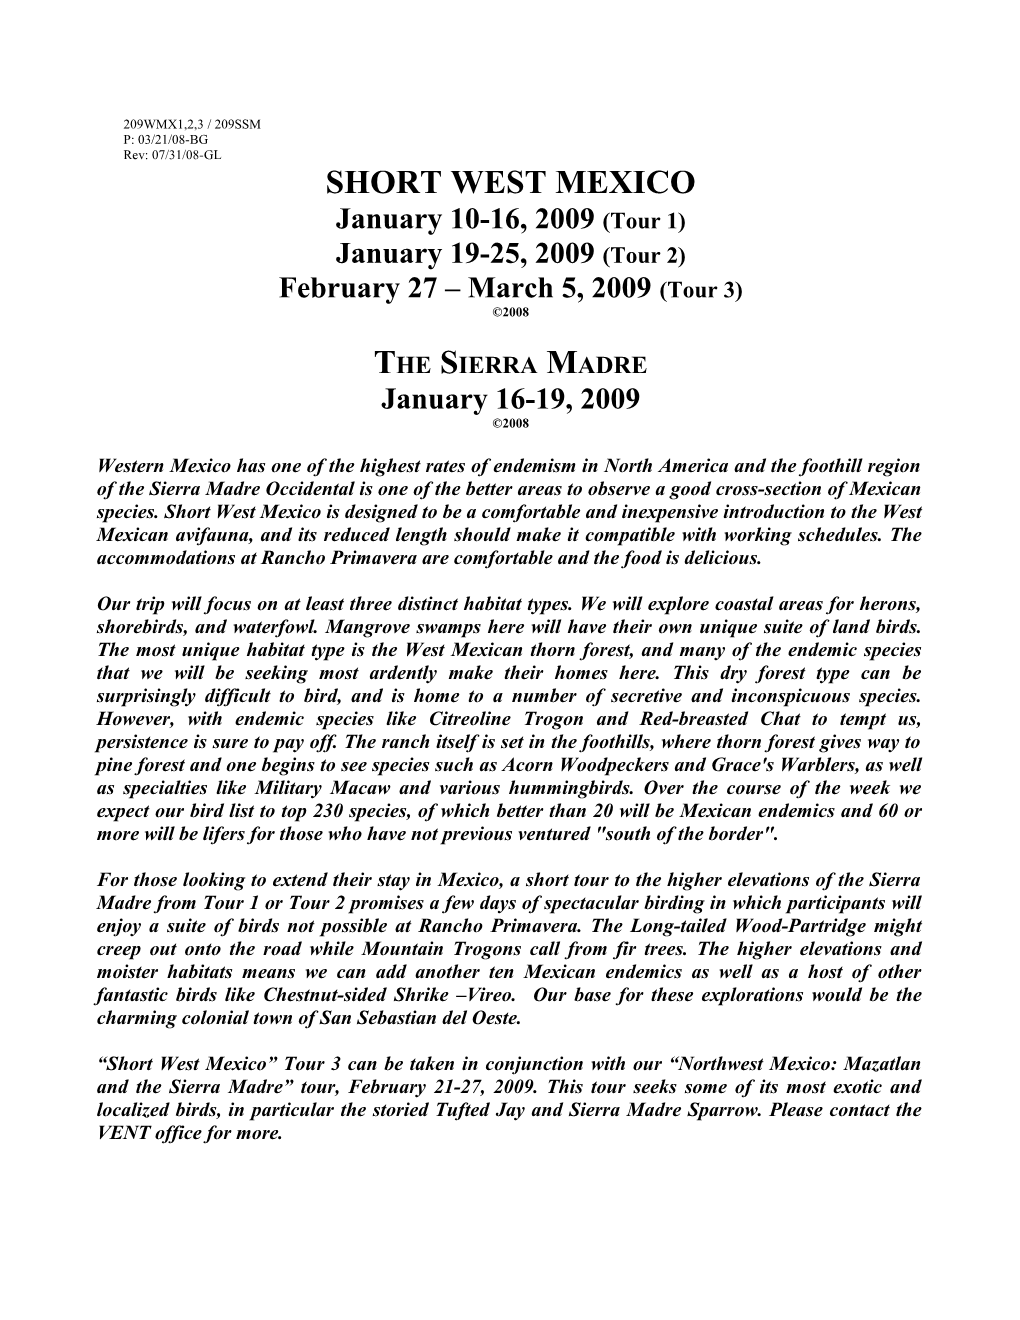 Short West Mexico